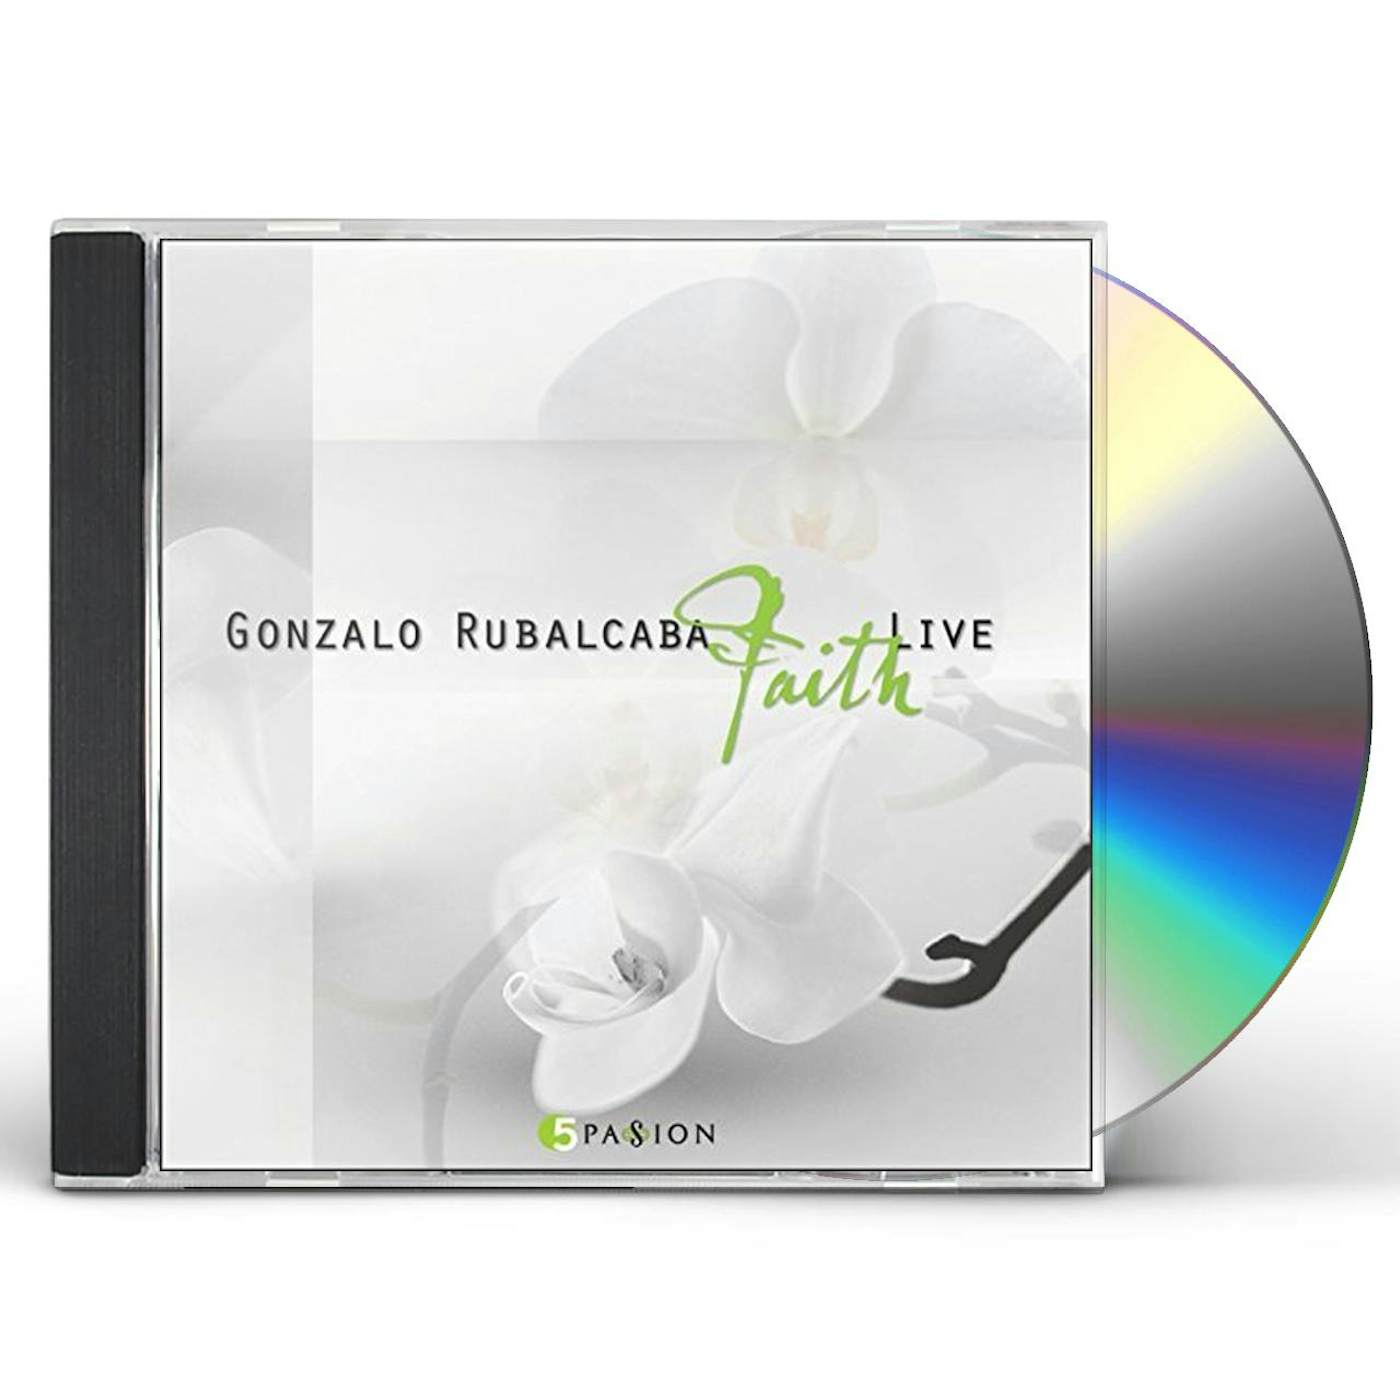 Gonzalo Rubalcaba LIVE FAITH CD